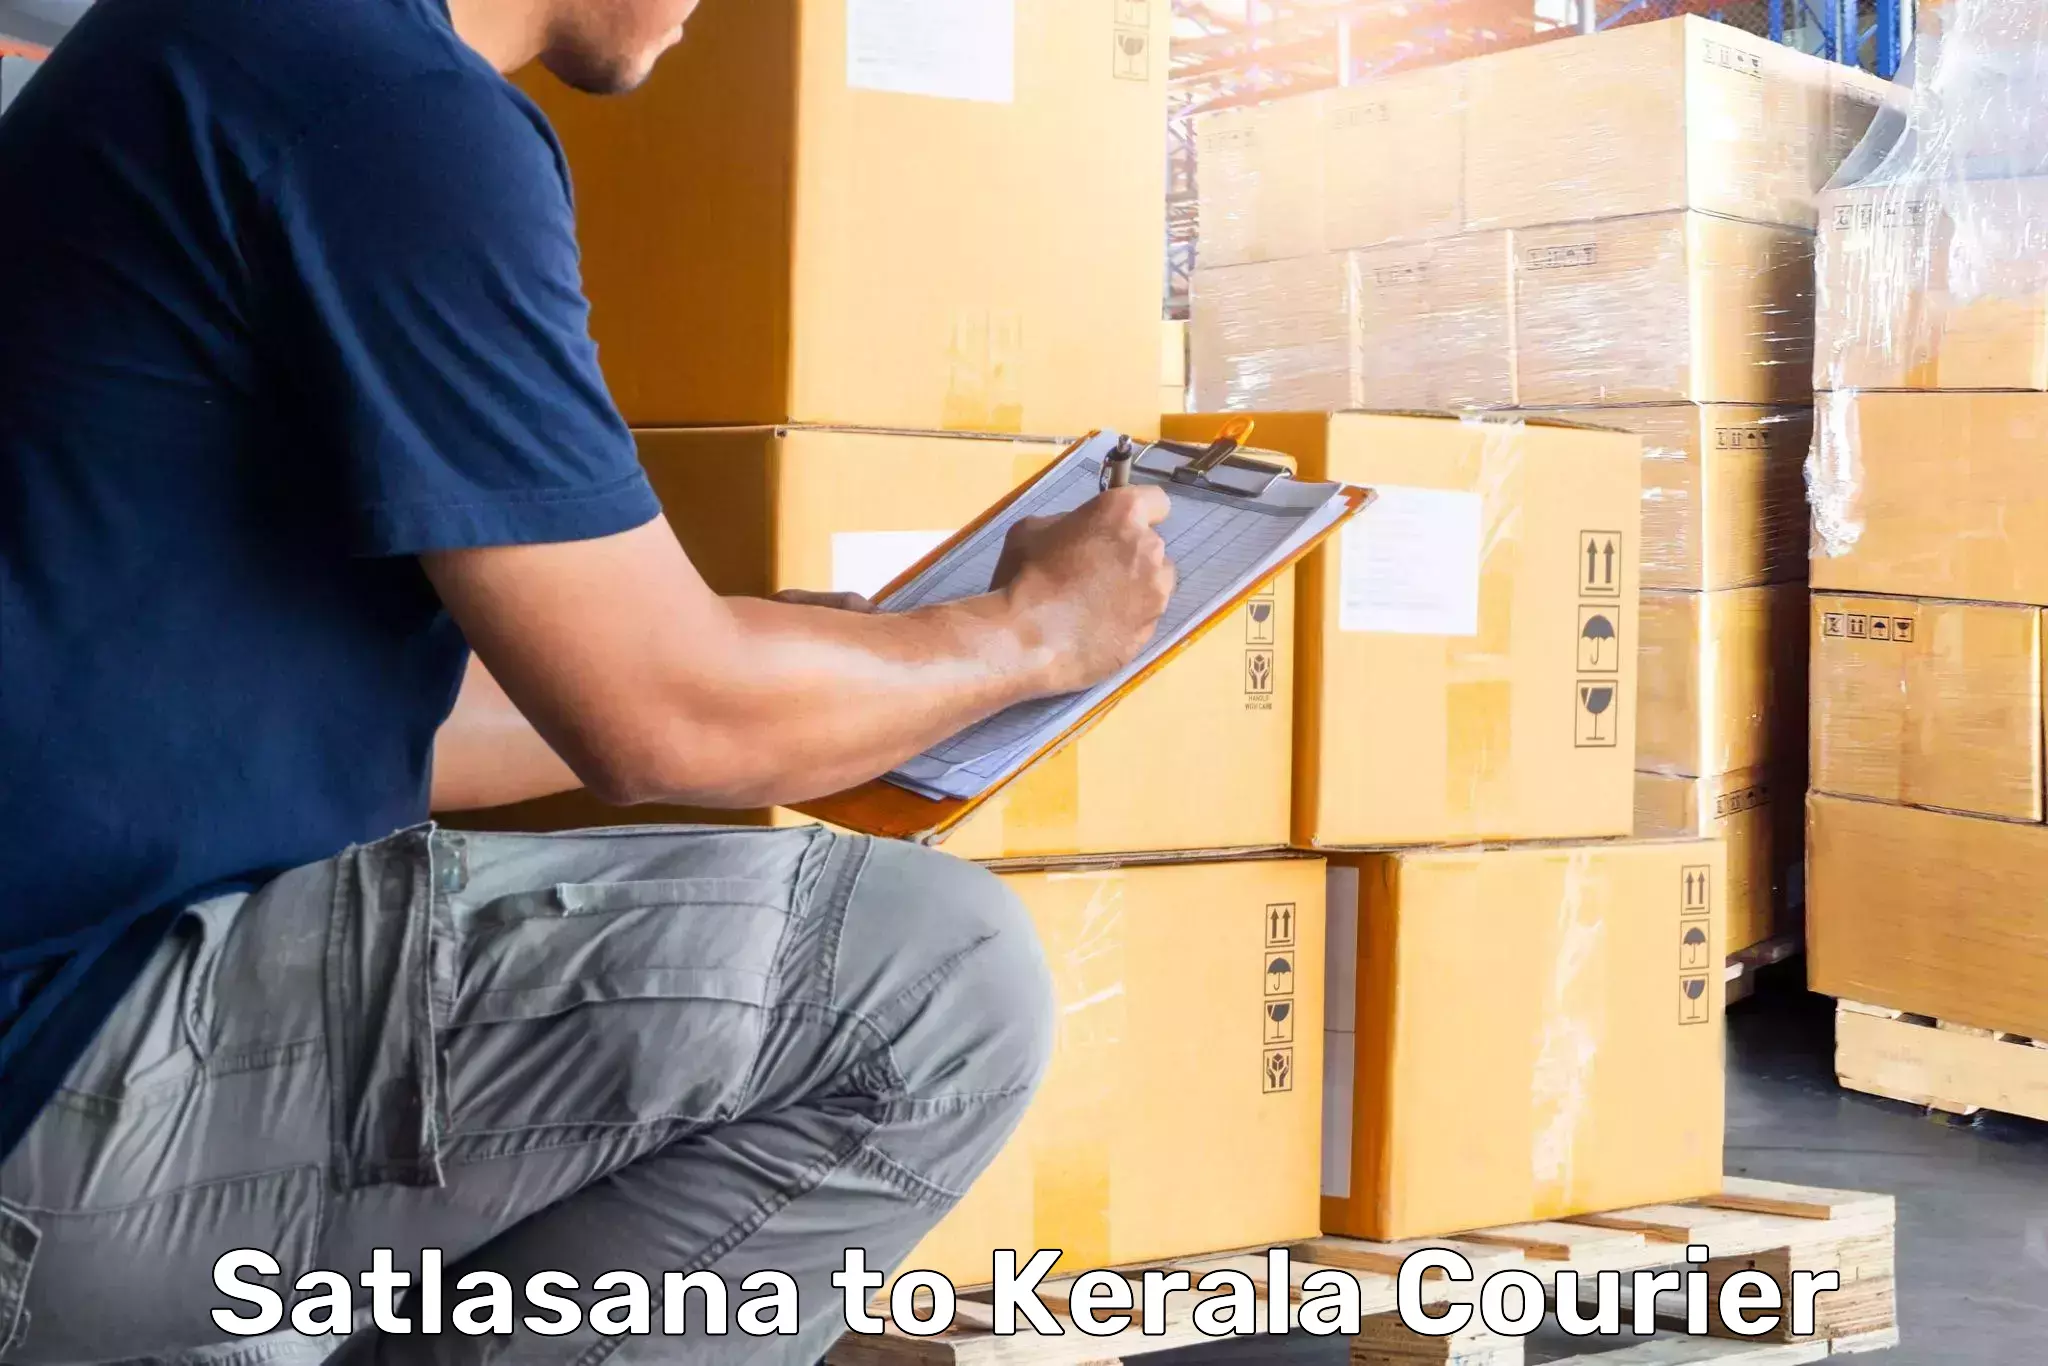 Luggage delivery estimate in Satlasana to Palai